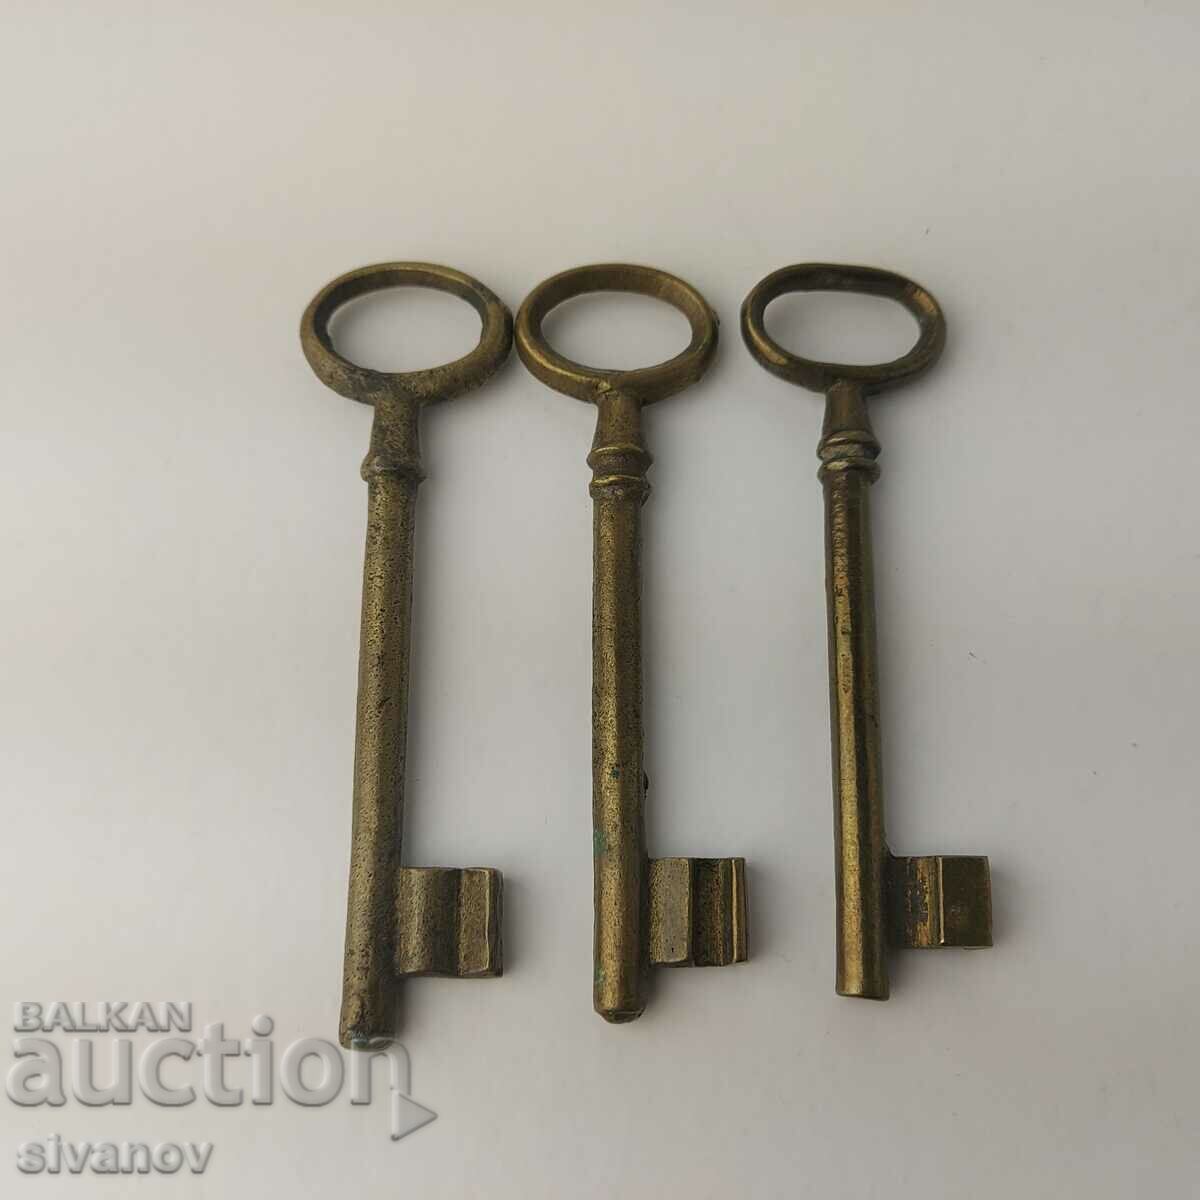 Old bronze keys 3 pieces #5548